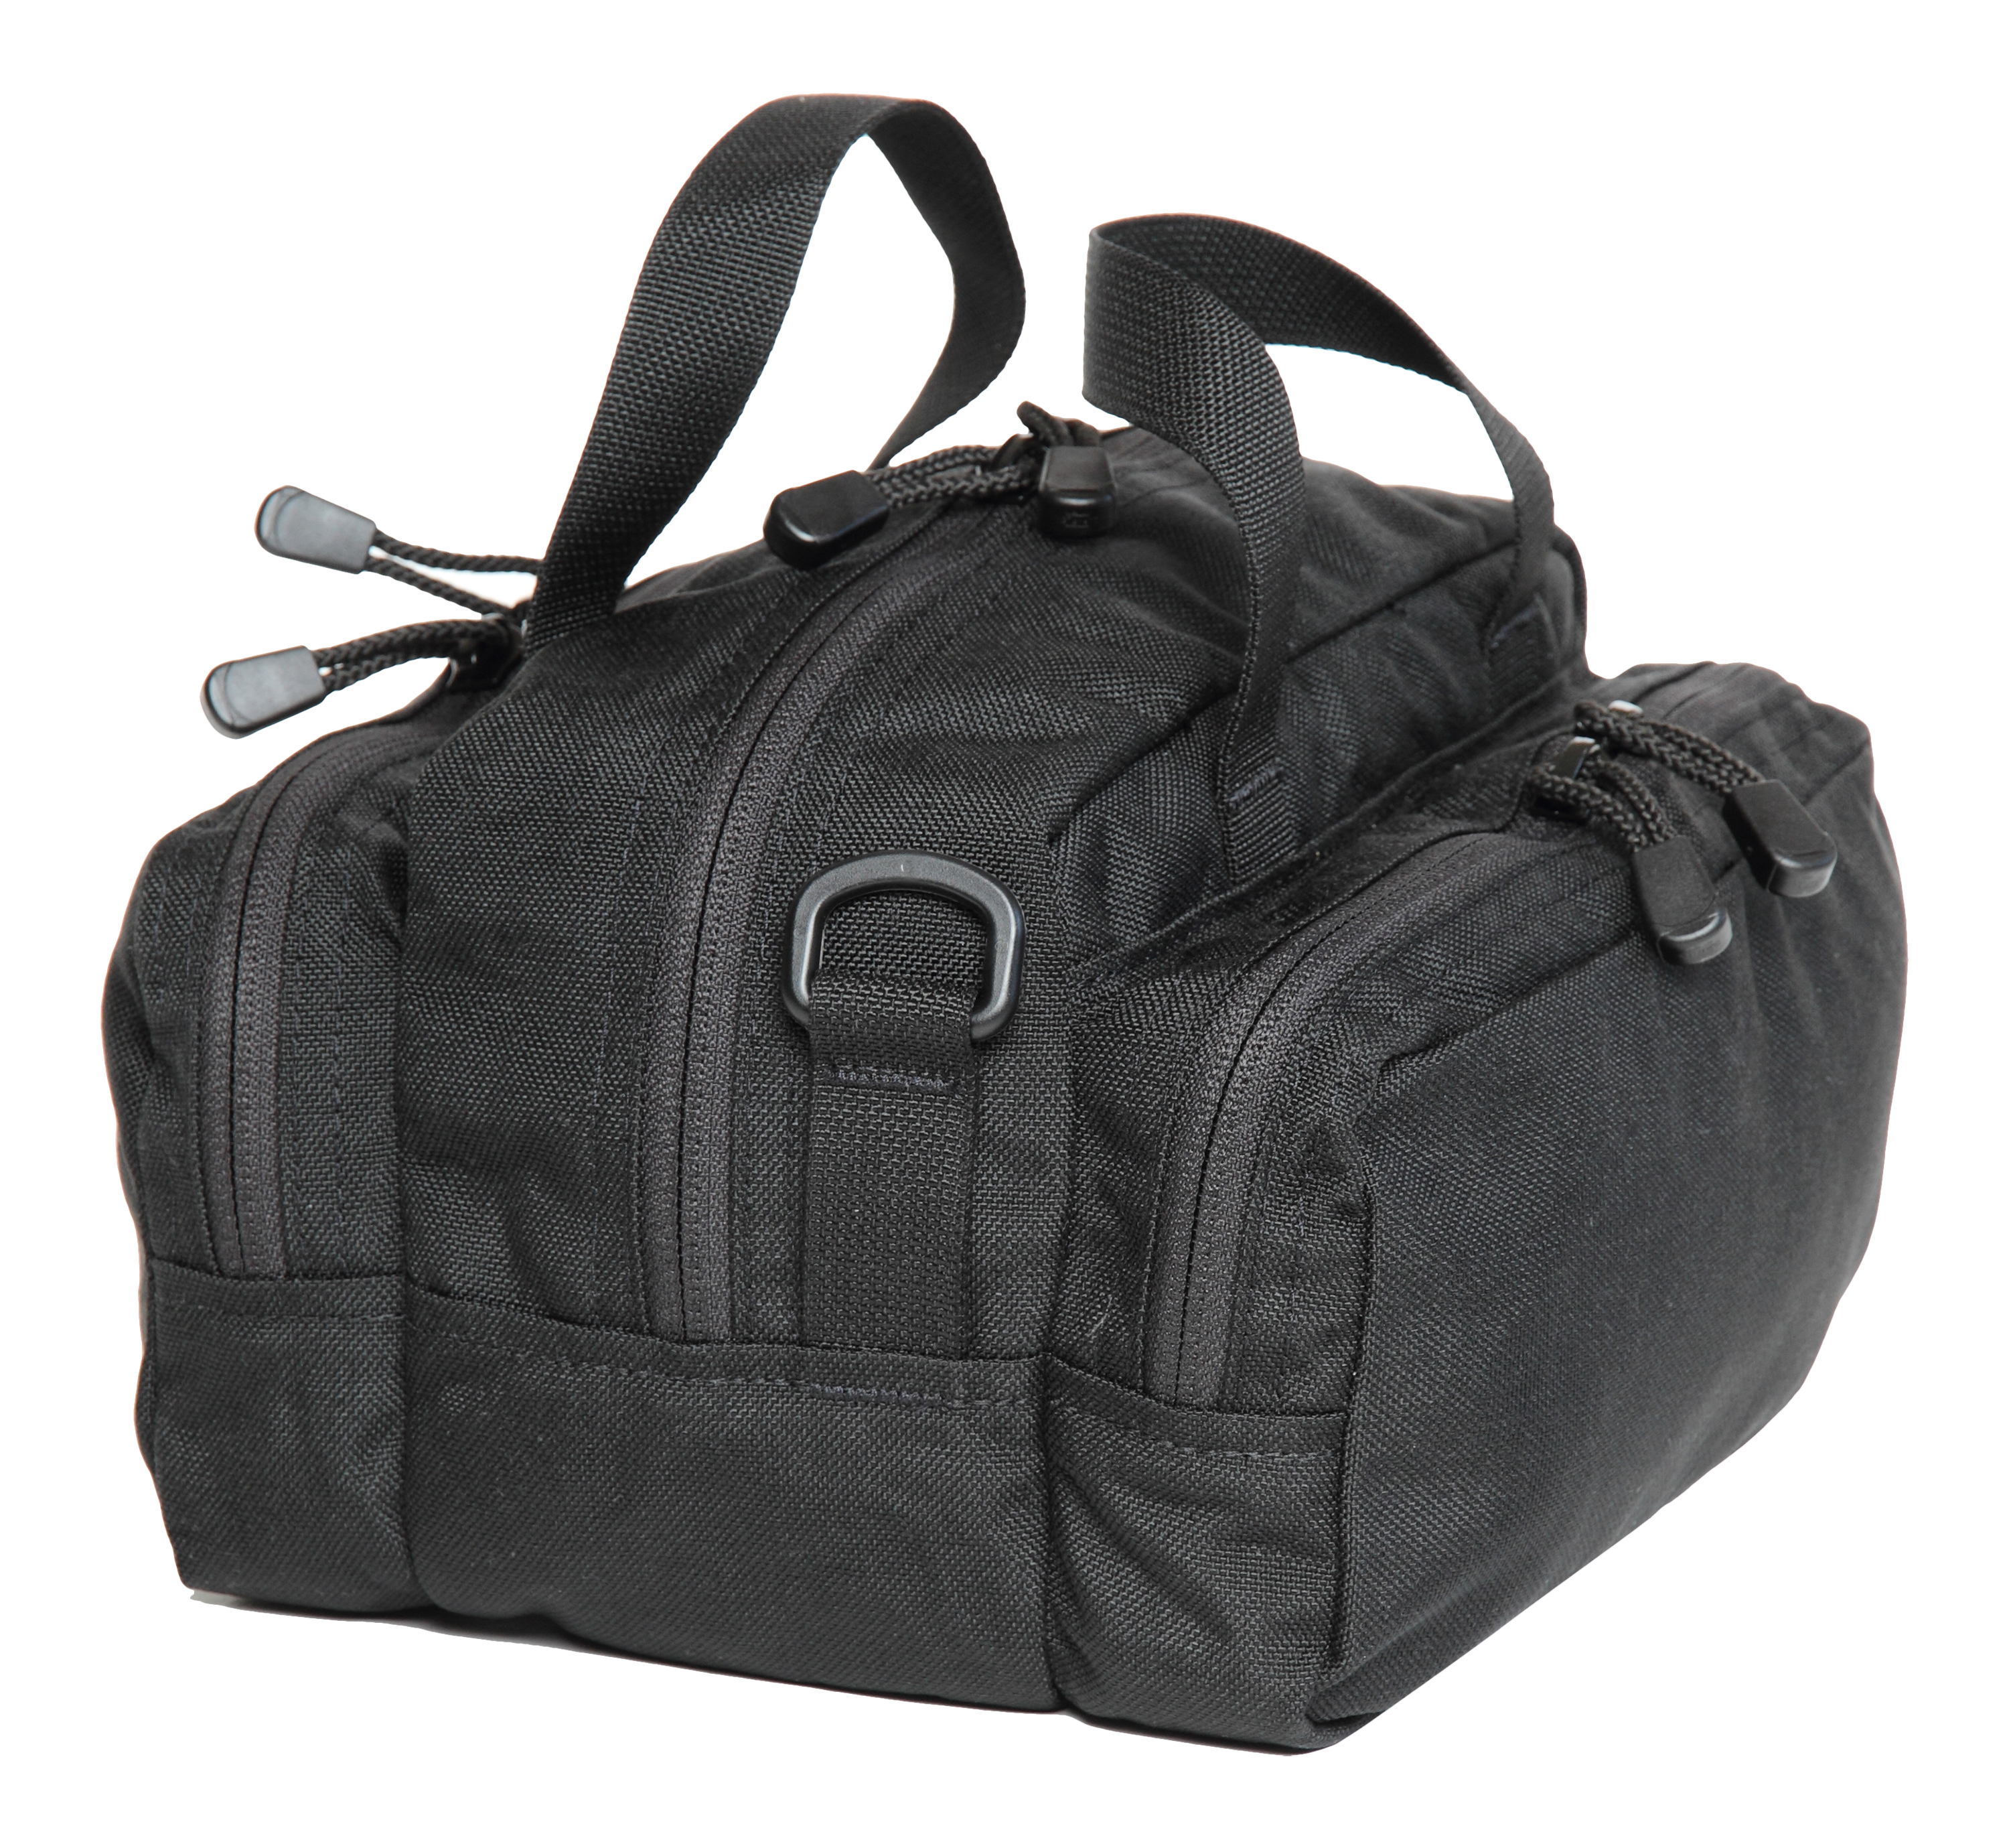 All Purpose Bag, BK | SPEC-OPS BRAND